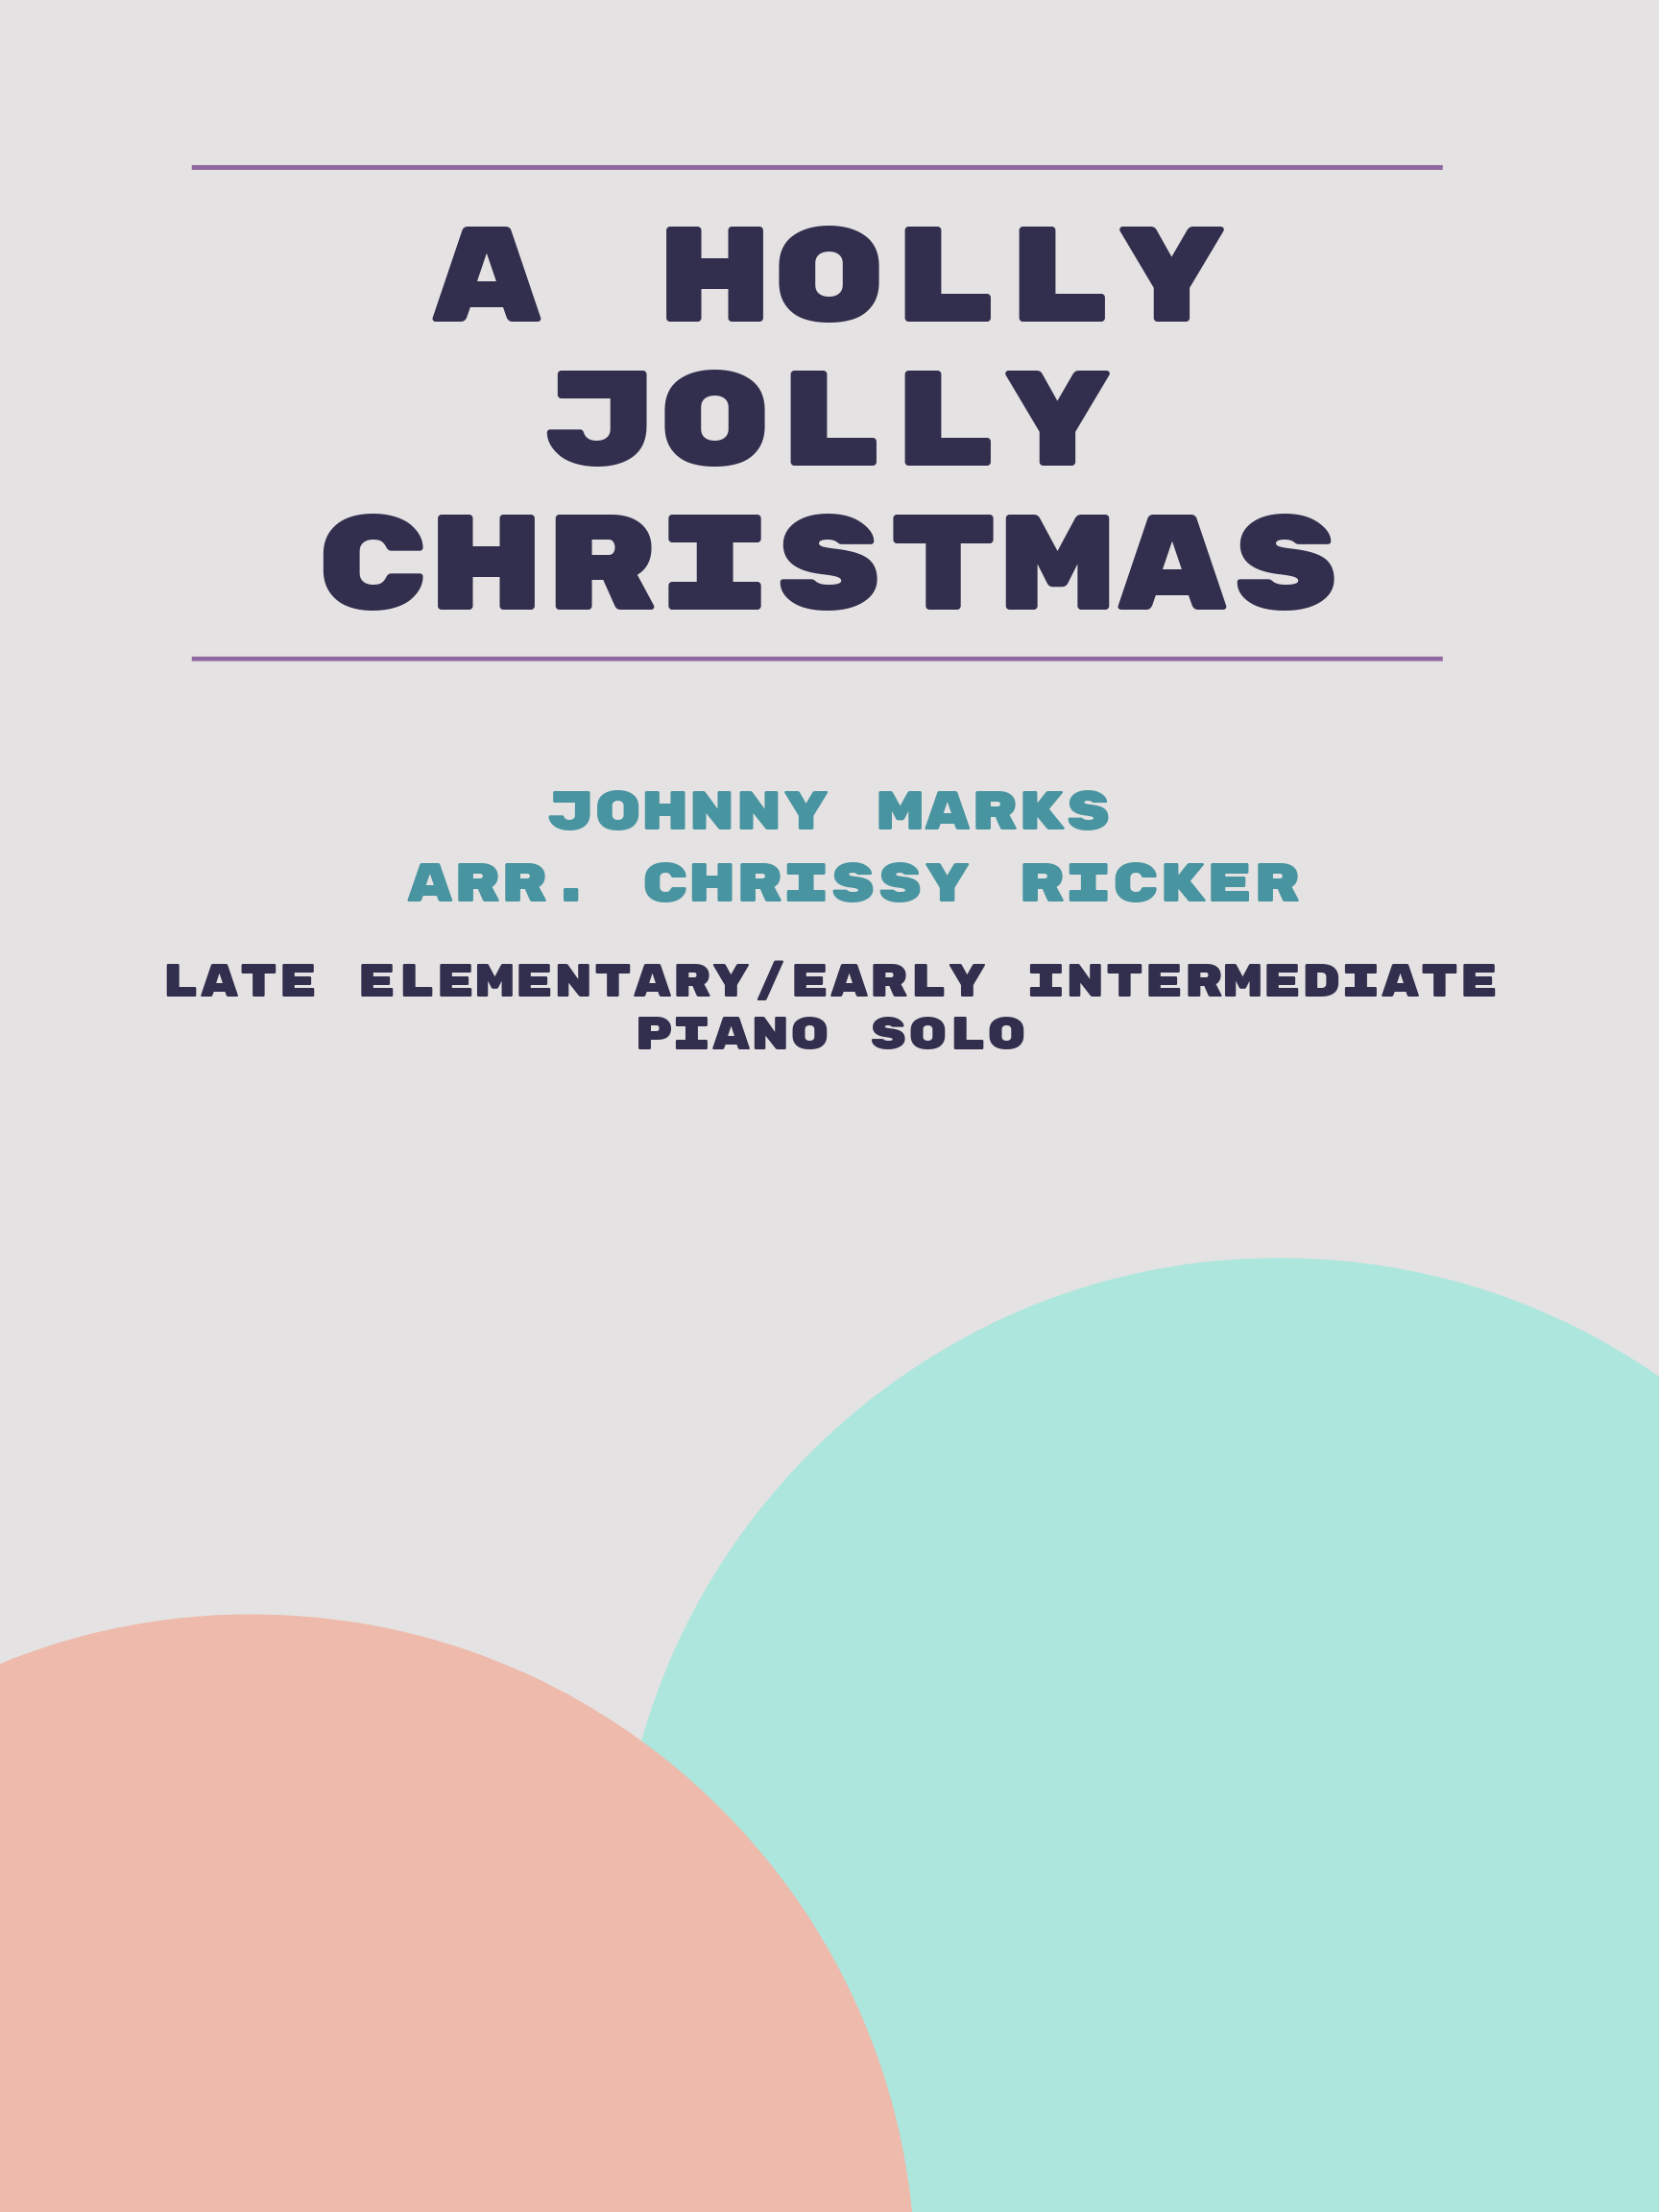 A Holly Jolly Christmas by Johnny Marks